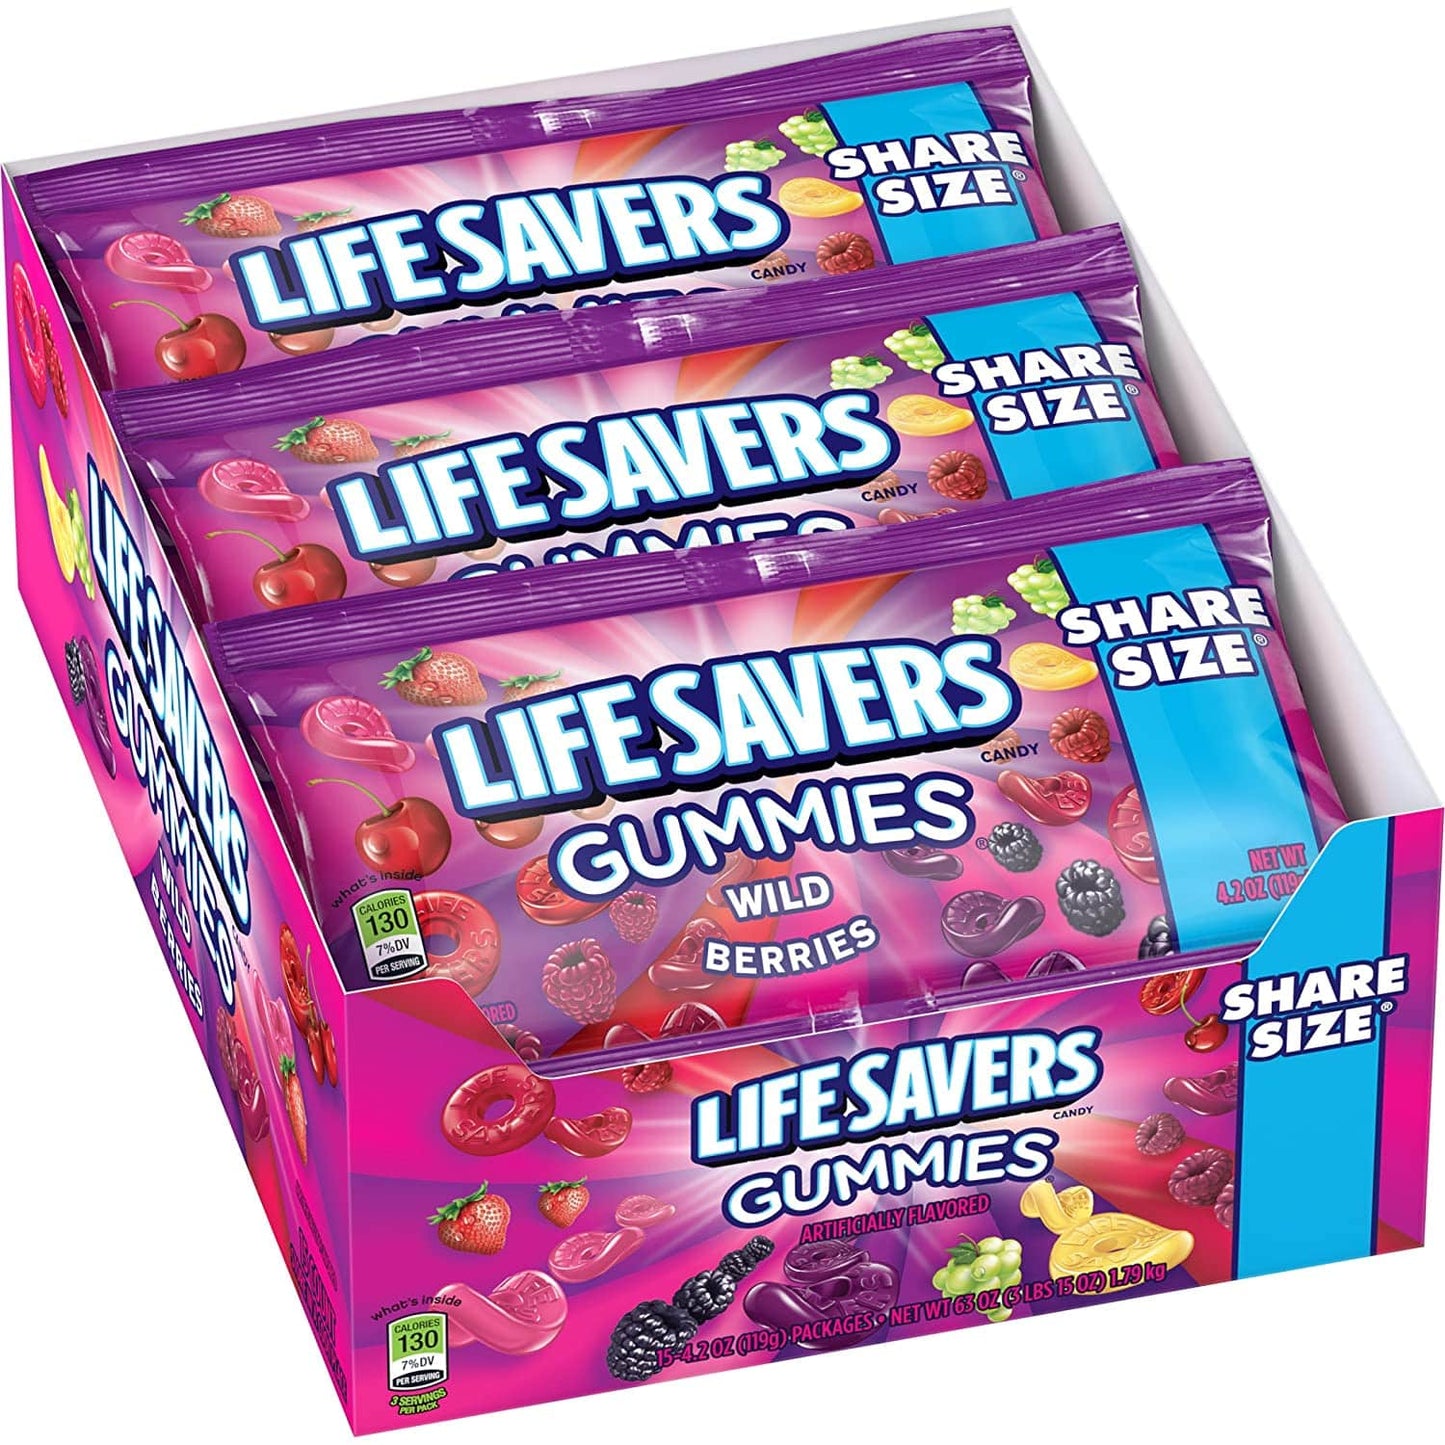 Life Savers Gummies Wild Berries Share Size – 4.2oz/ea -15ct